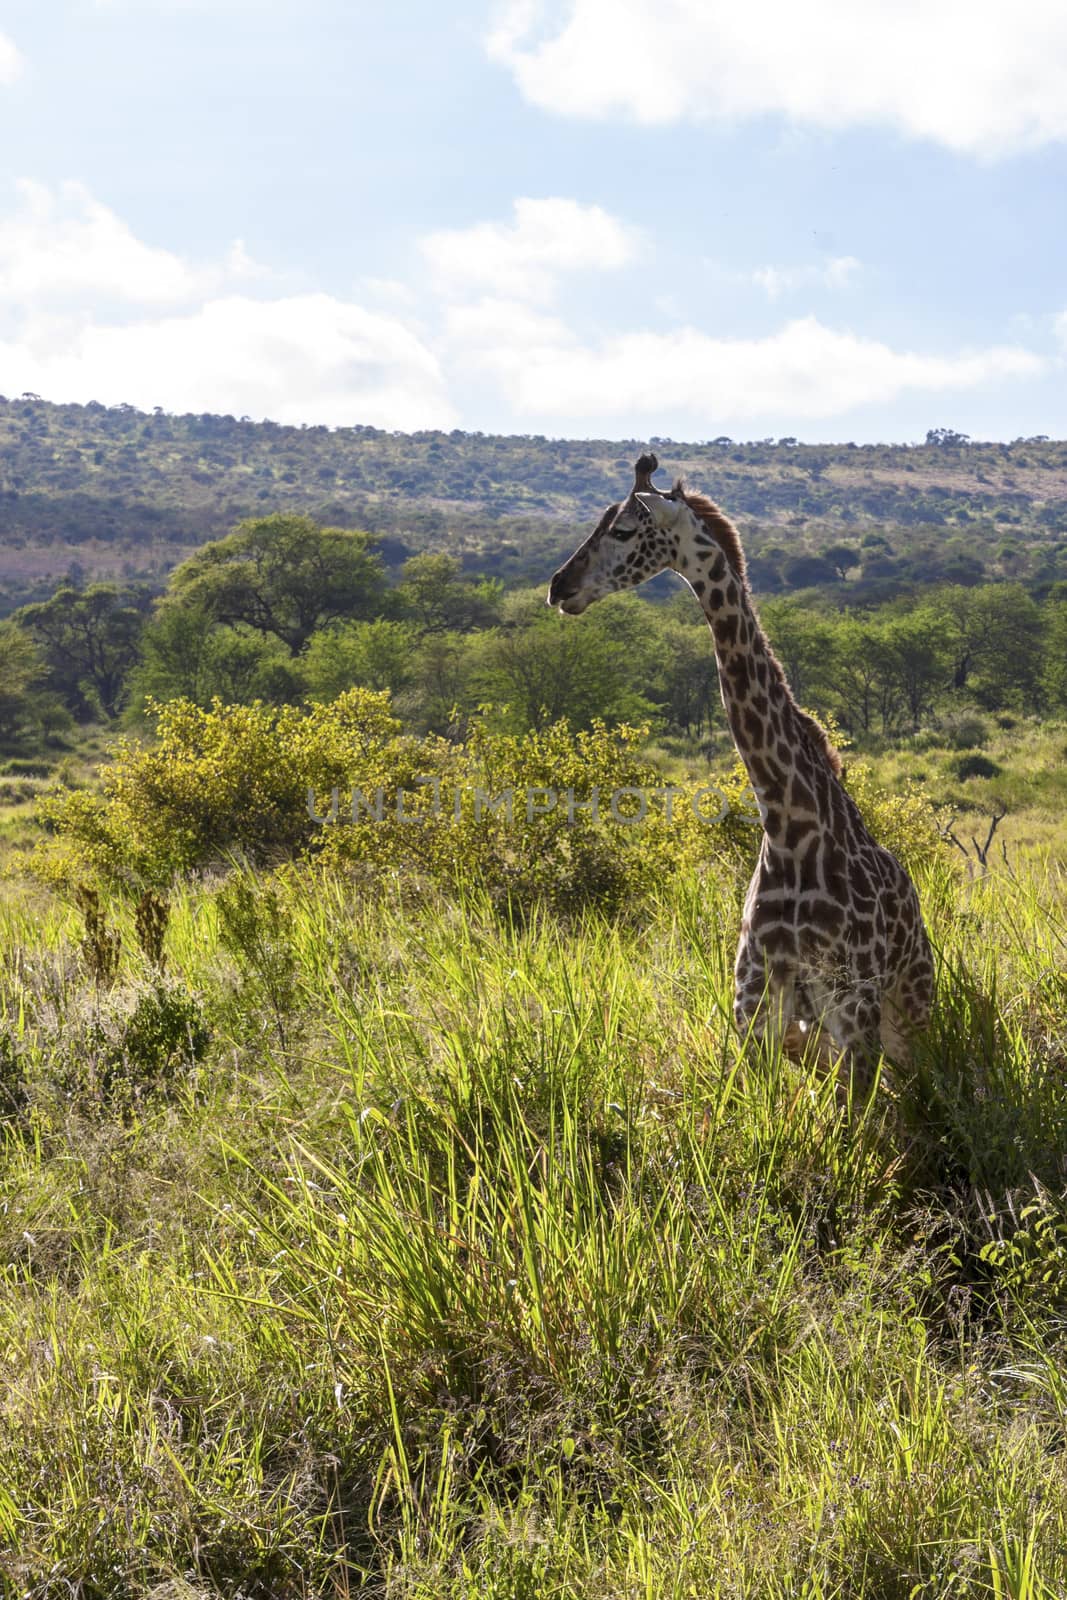 Beautiful African landscape with a giraffe